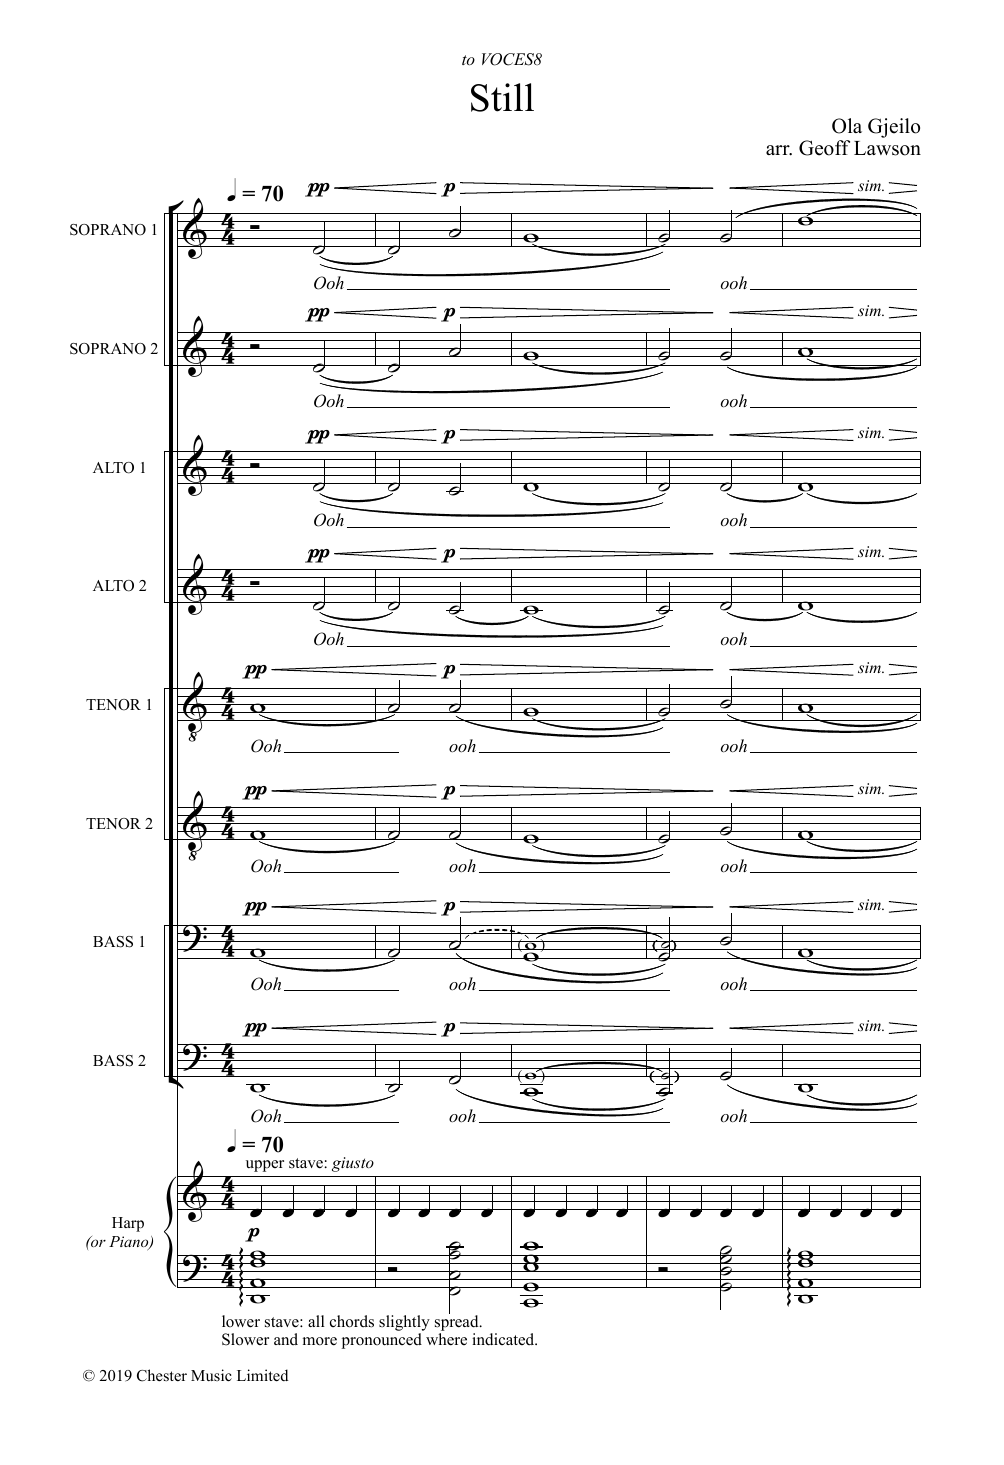 Ola Gjeilo Still (arr. Geoff Lawson) Sheet Music Notes & Chords for SSAATTBB Choir - Download or Print PDF